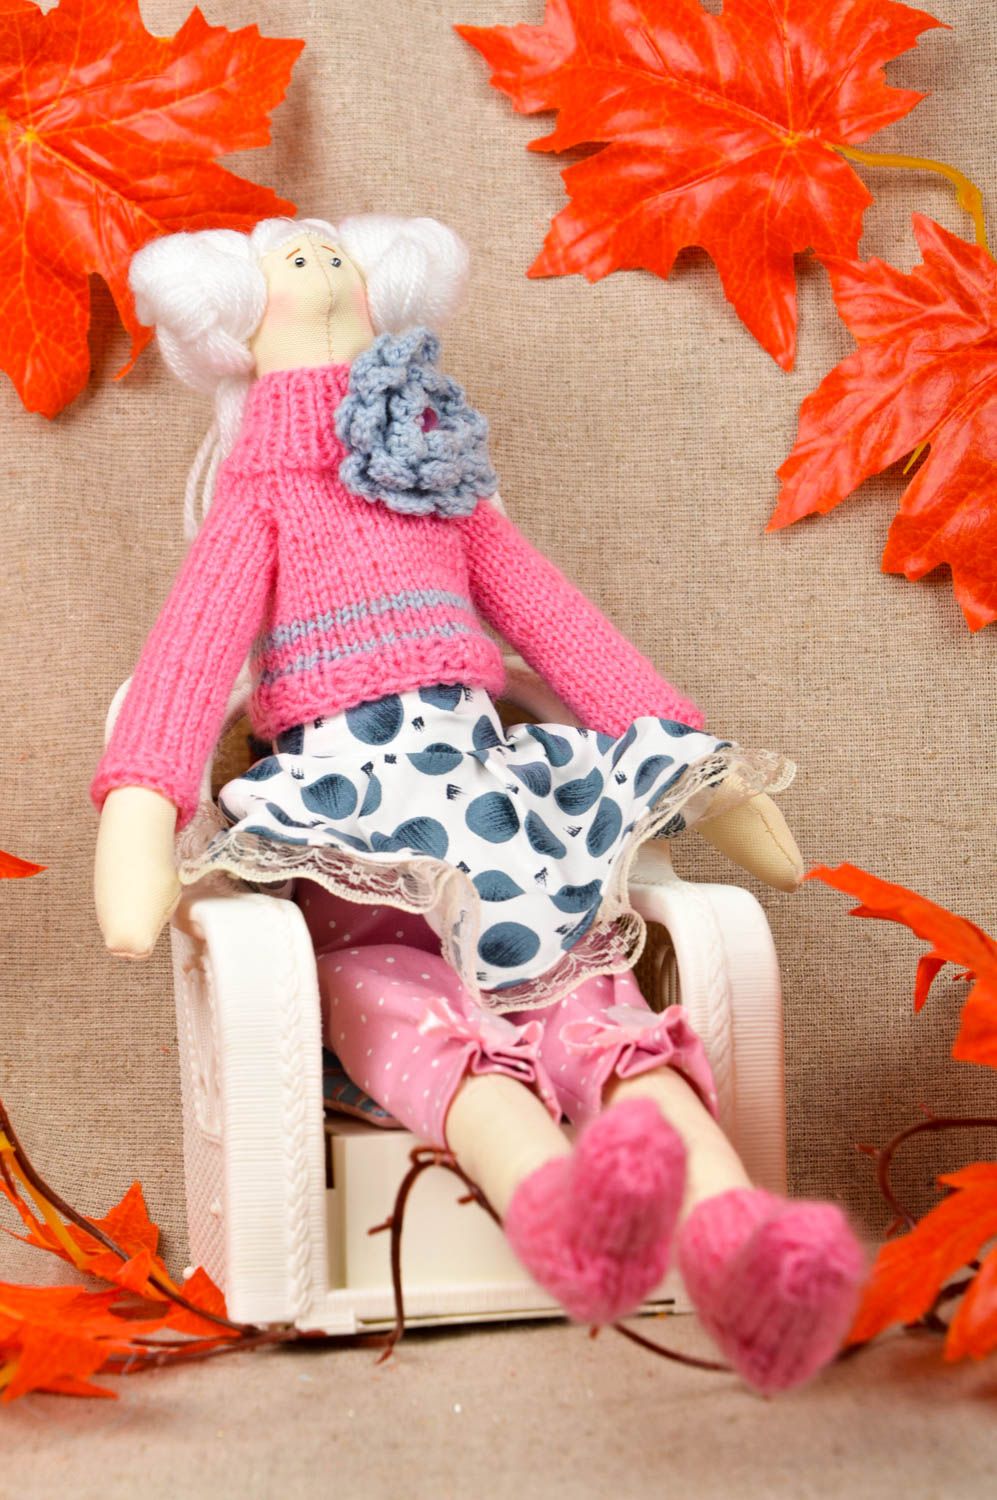 Rag doll handmade fabric toy fabric toy for children nursery decor toys photo 1